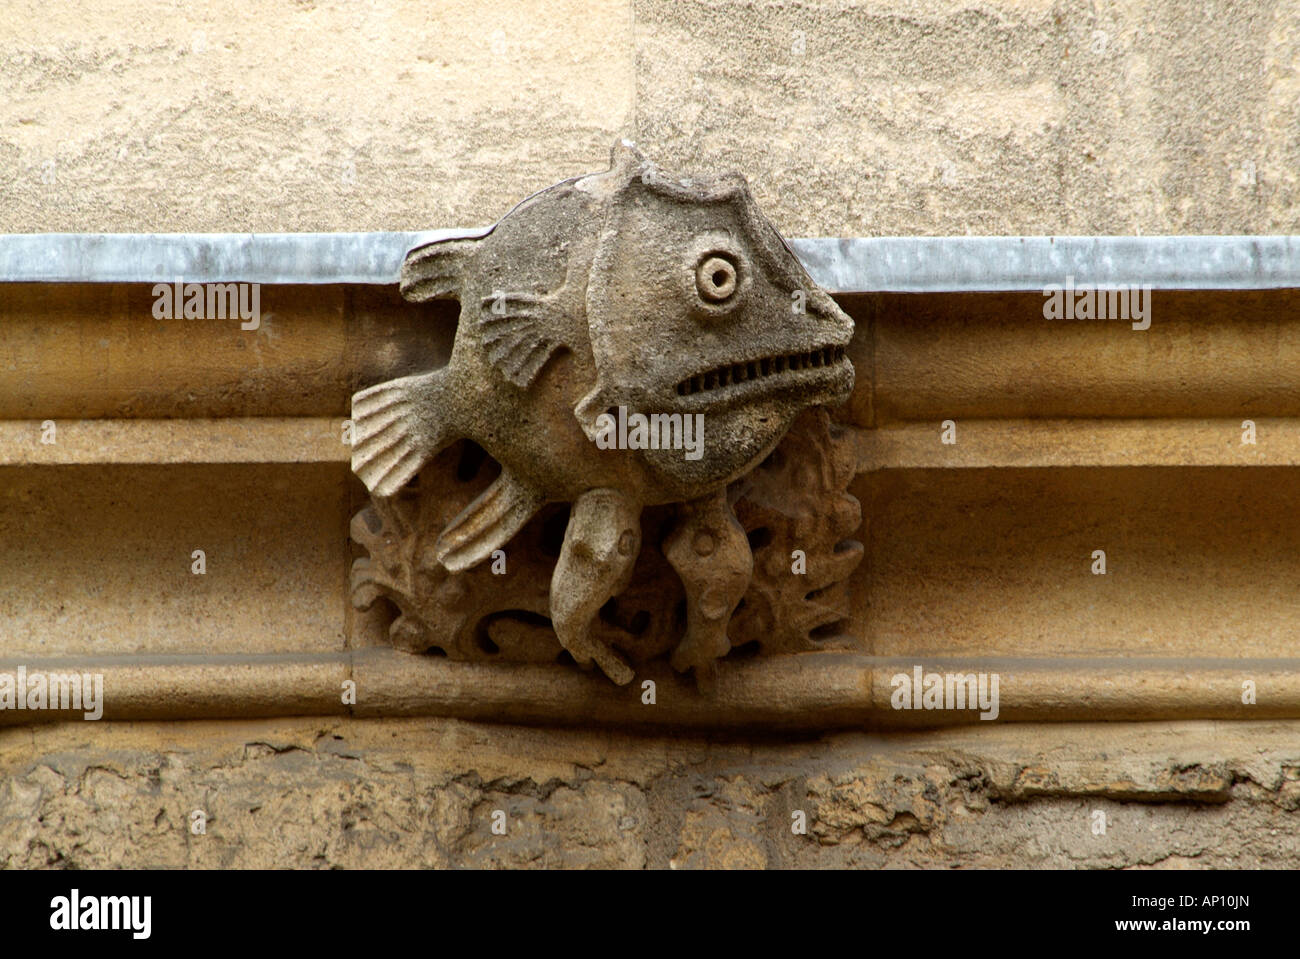 fish gargoyle close up Oxford university town stone carving distorted cartoon effigy head caricature UK United Kingdom England E Stock Photo